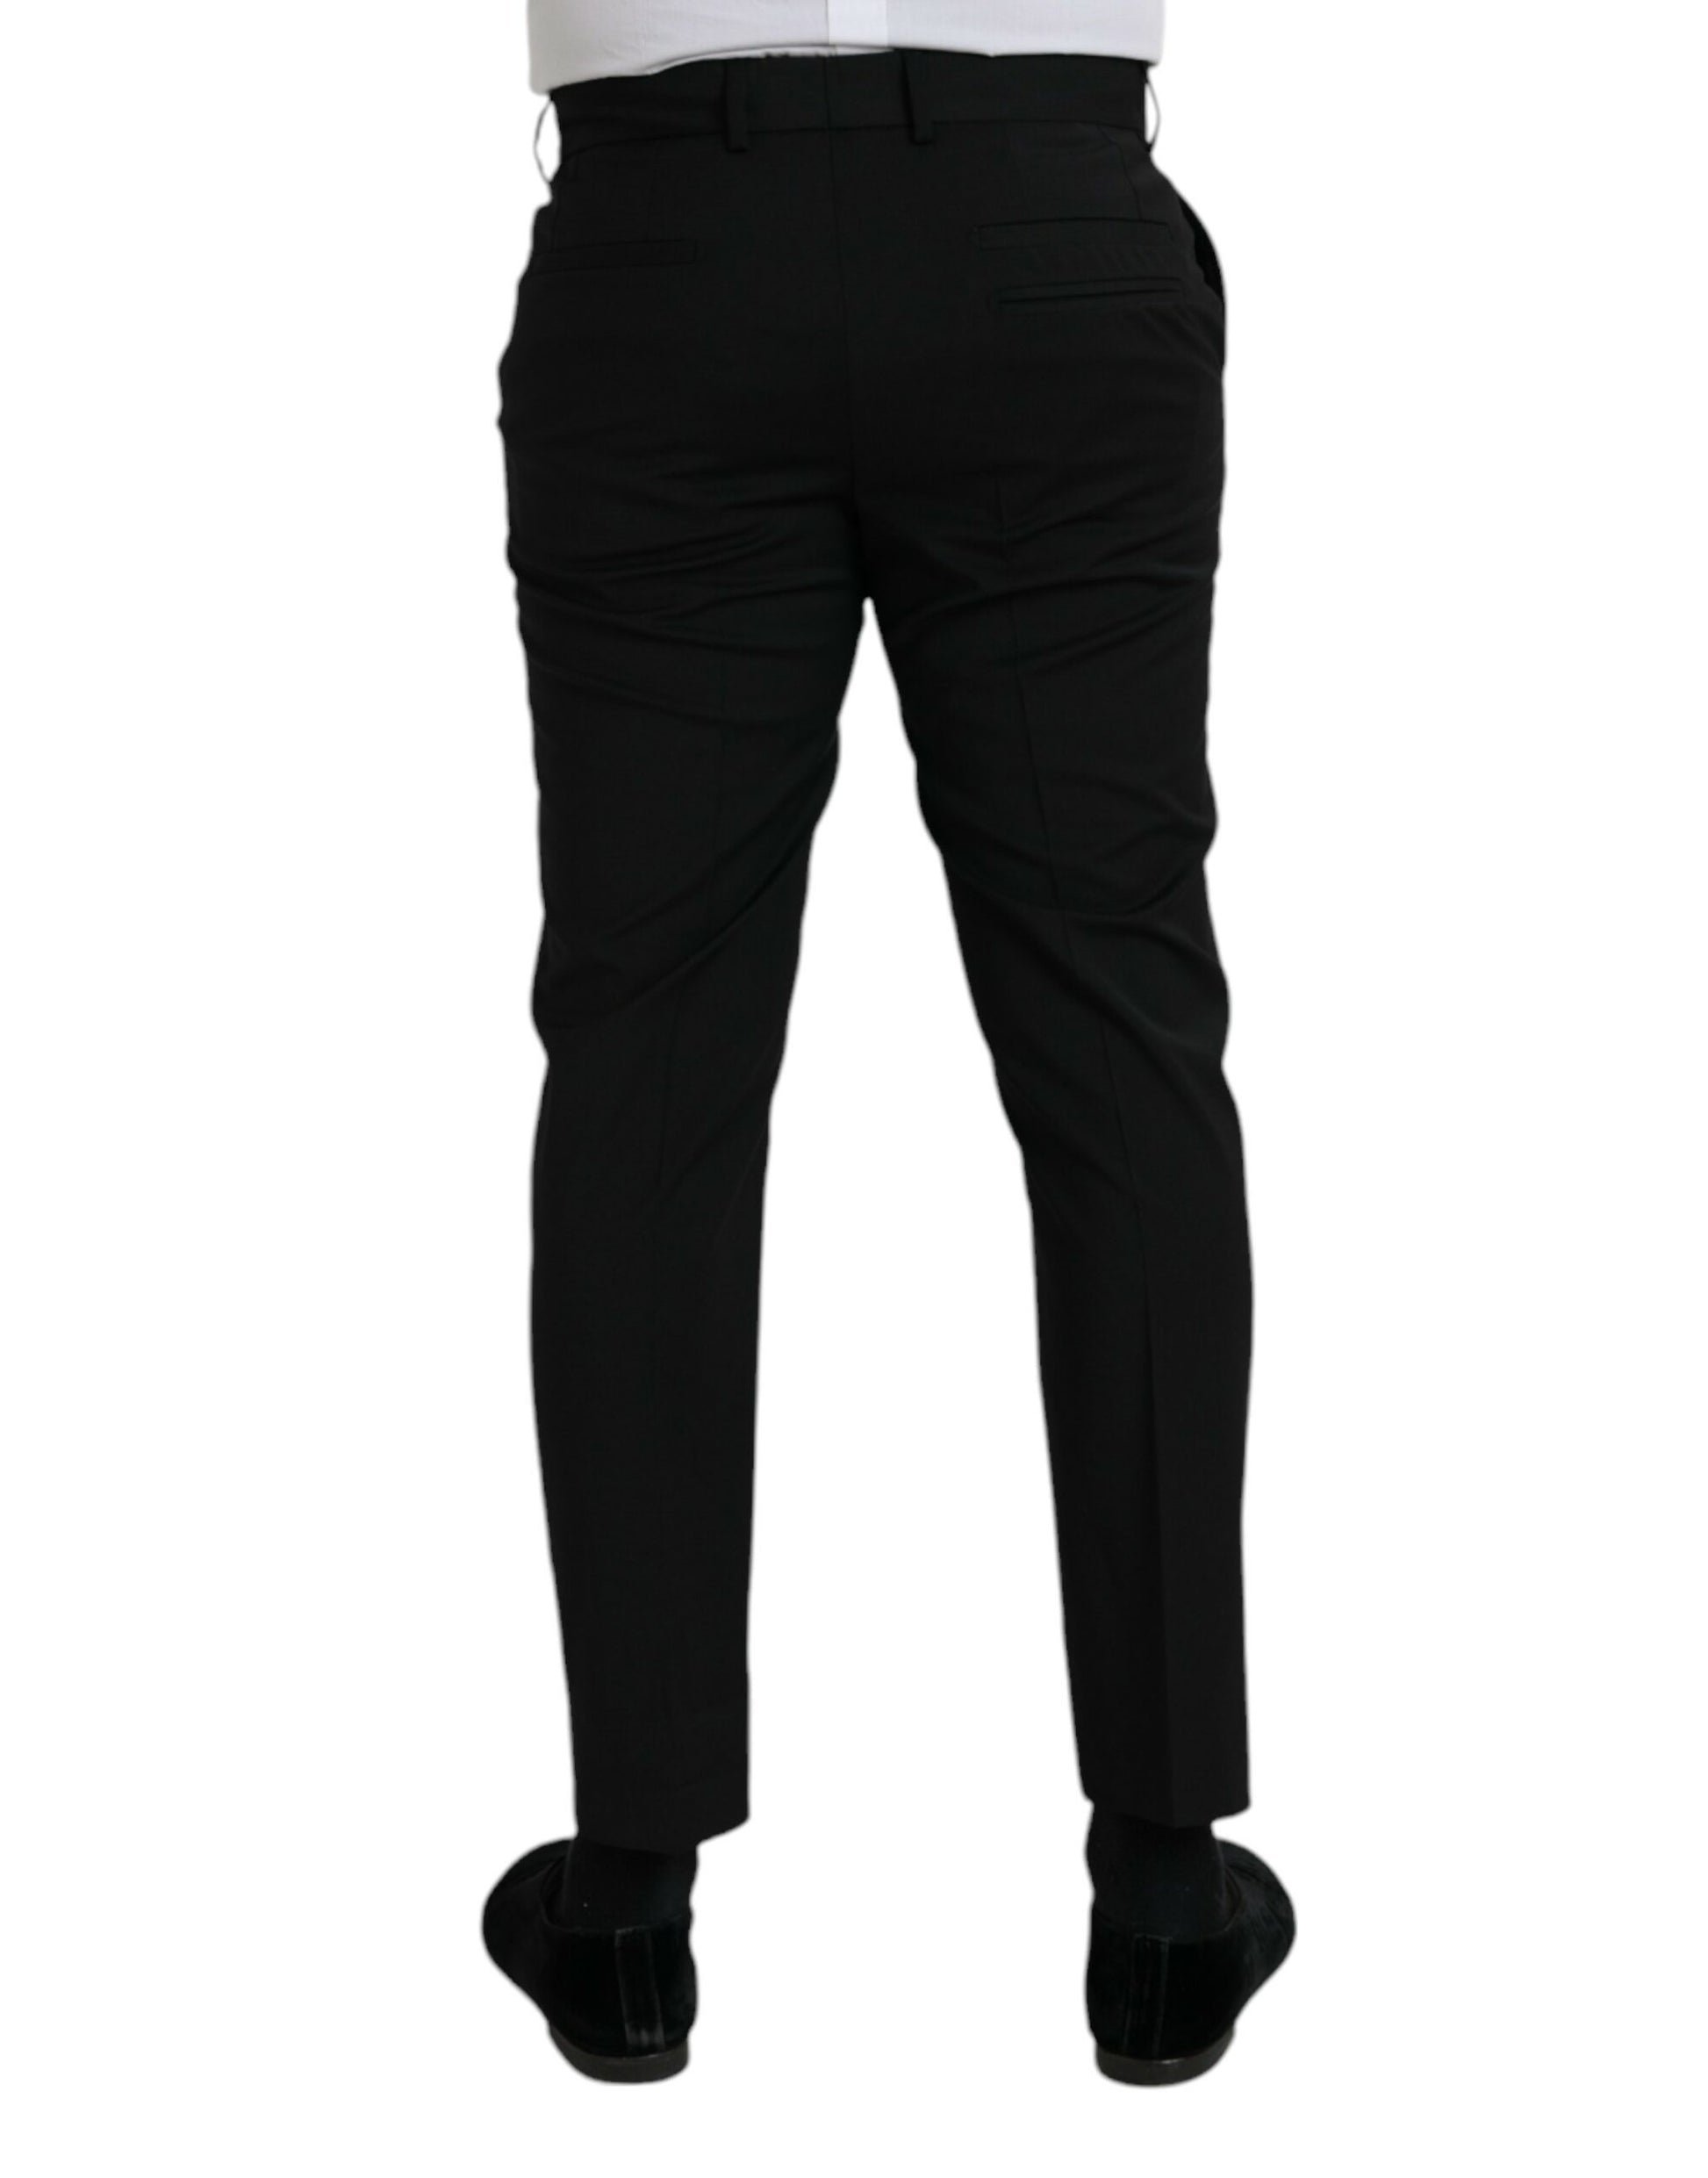 Fashionsarah.com Fashionsarah.com Dolce & Gabbana Black Wool SlimFit Dress Formal Pants